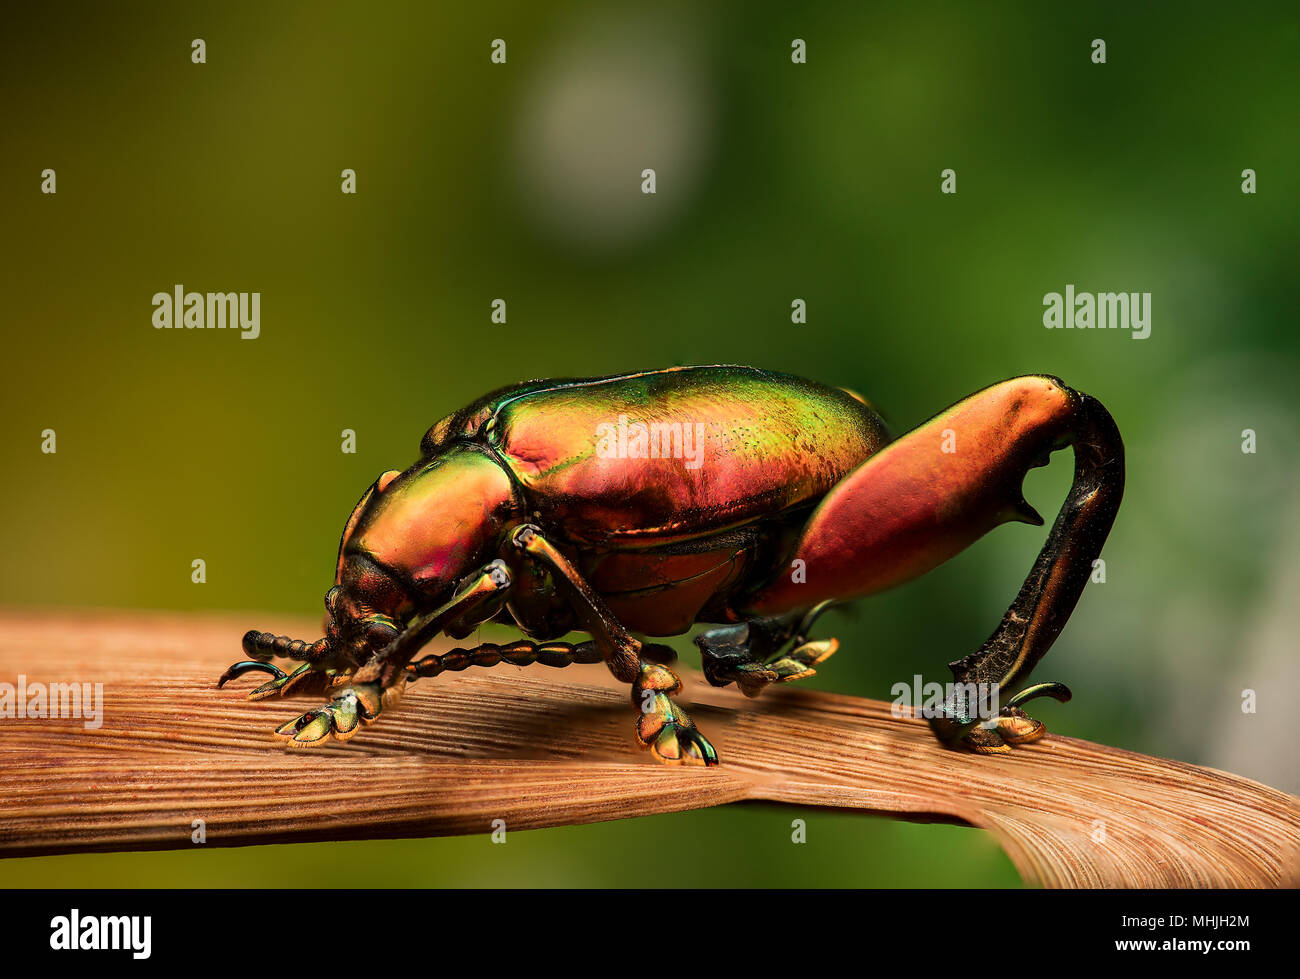 Sagra sp. - frog legged beetle Stock Photo